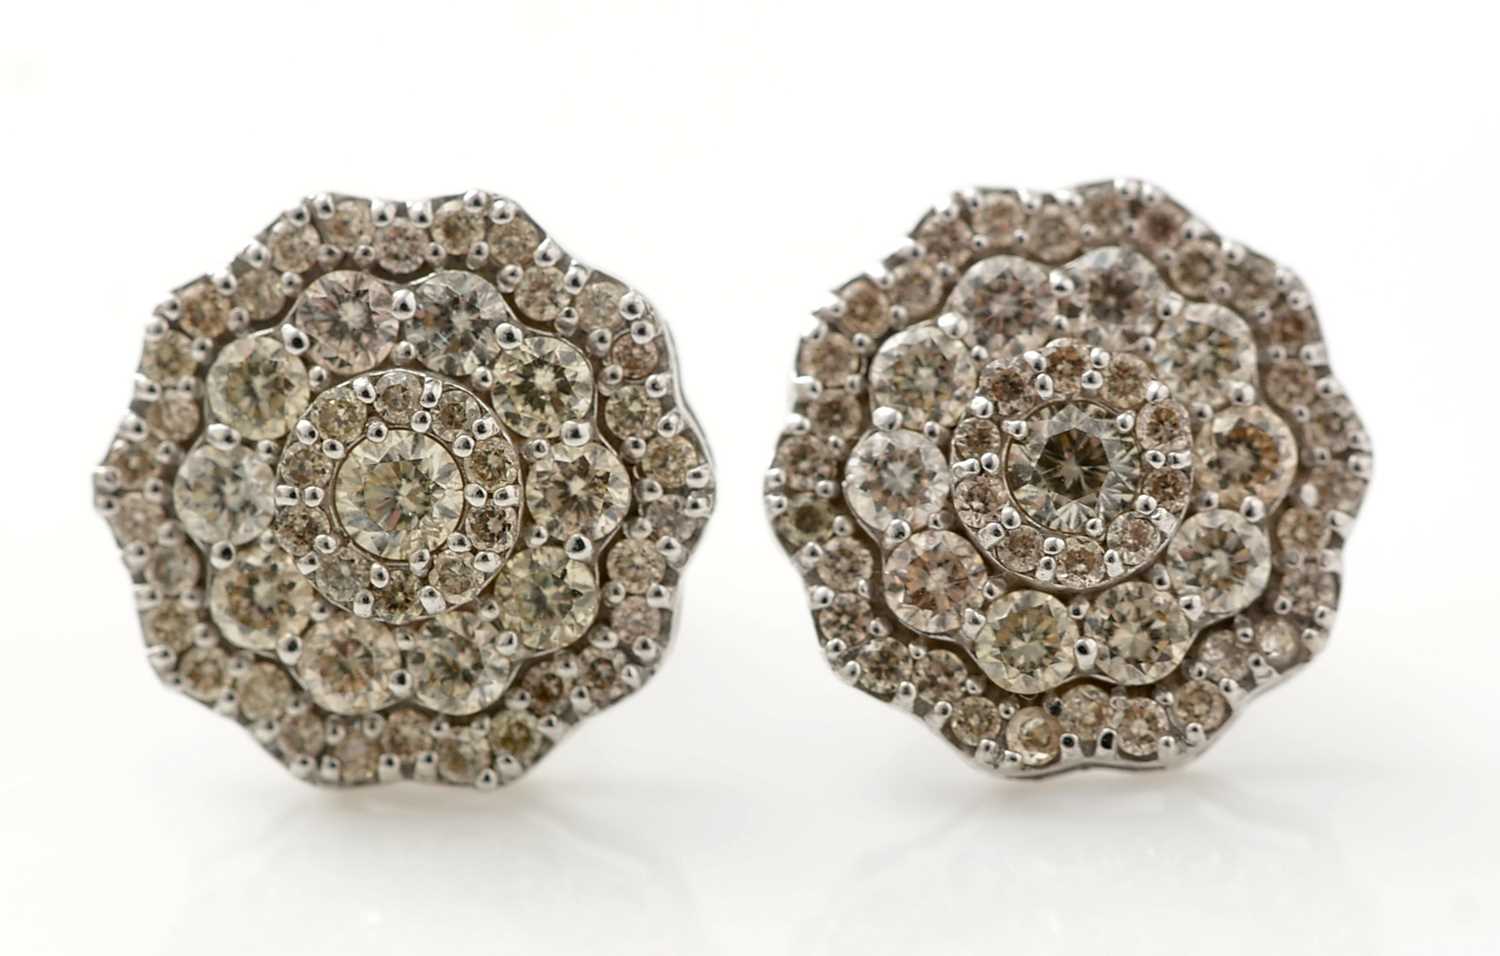 Lot 156 - A pair of diamond earrings